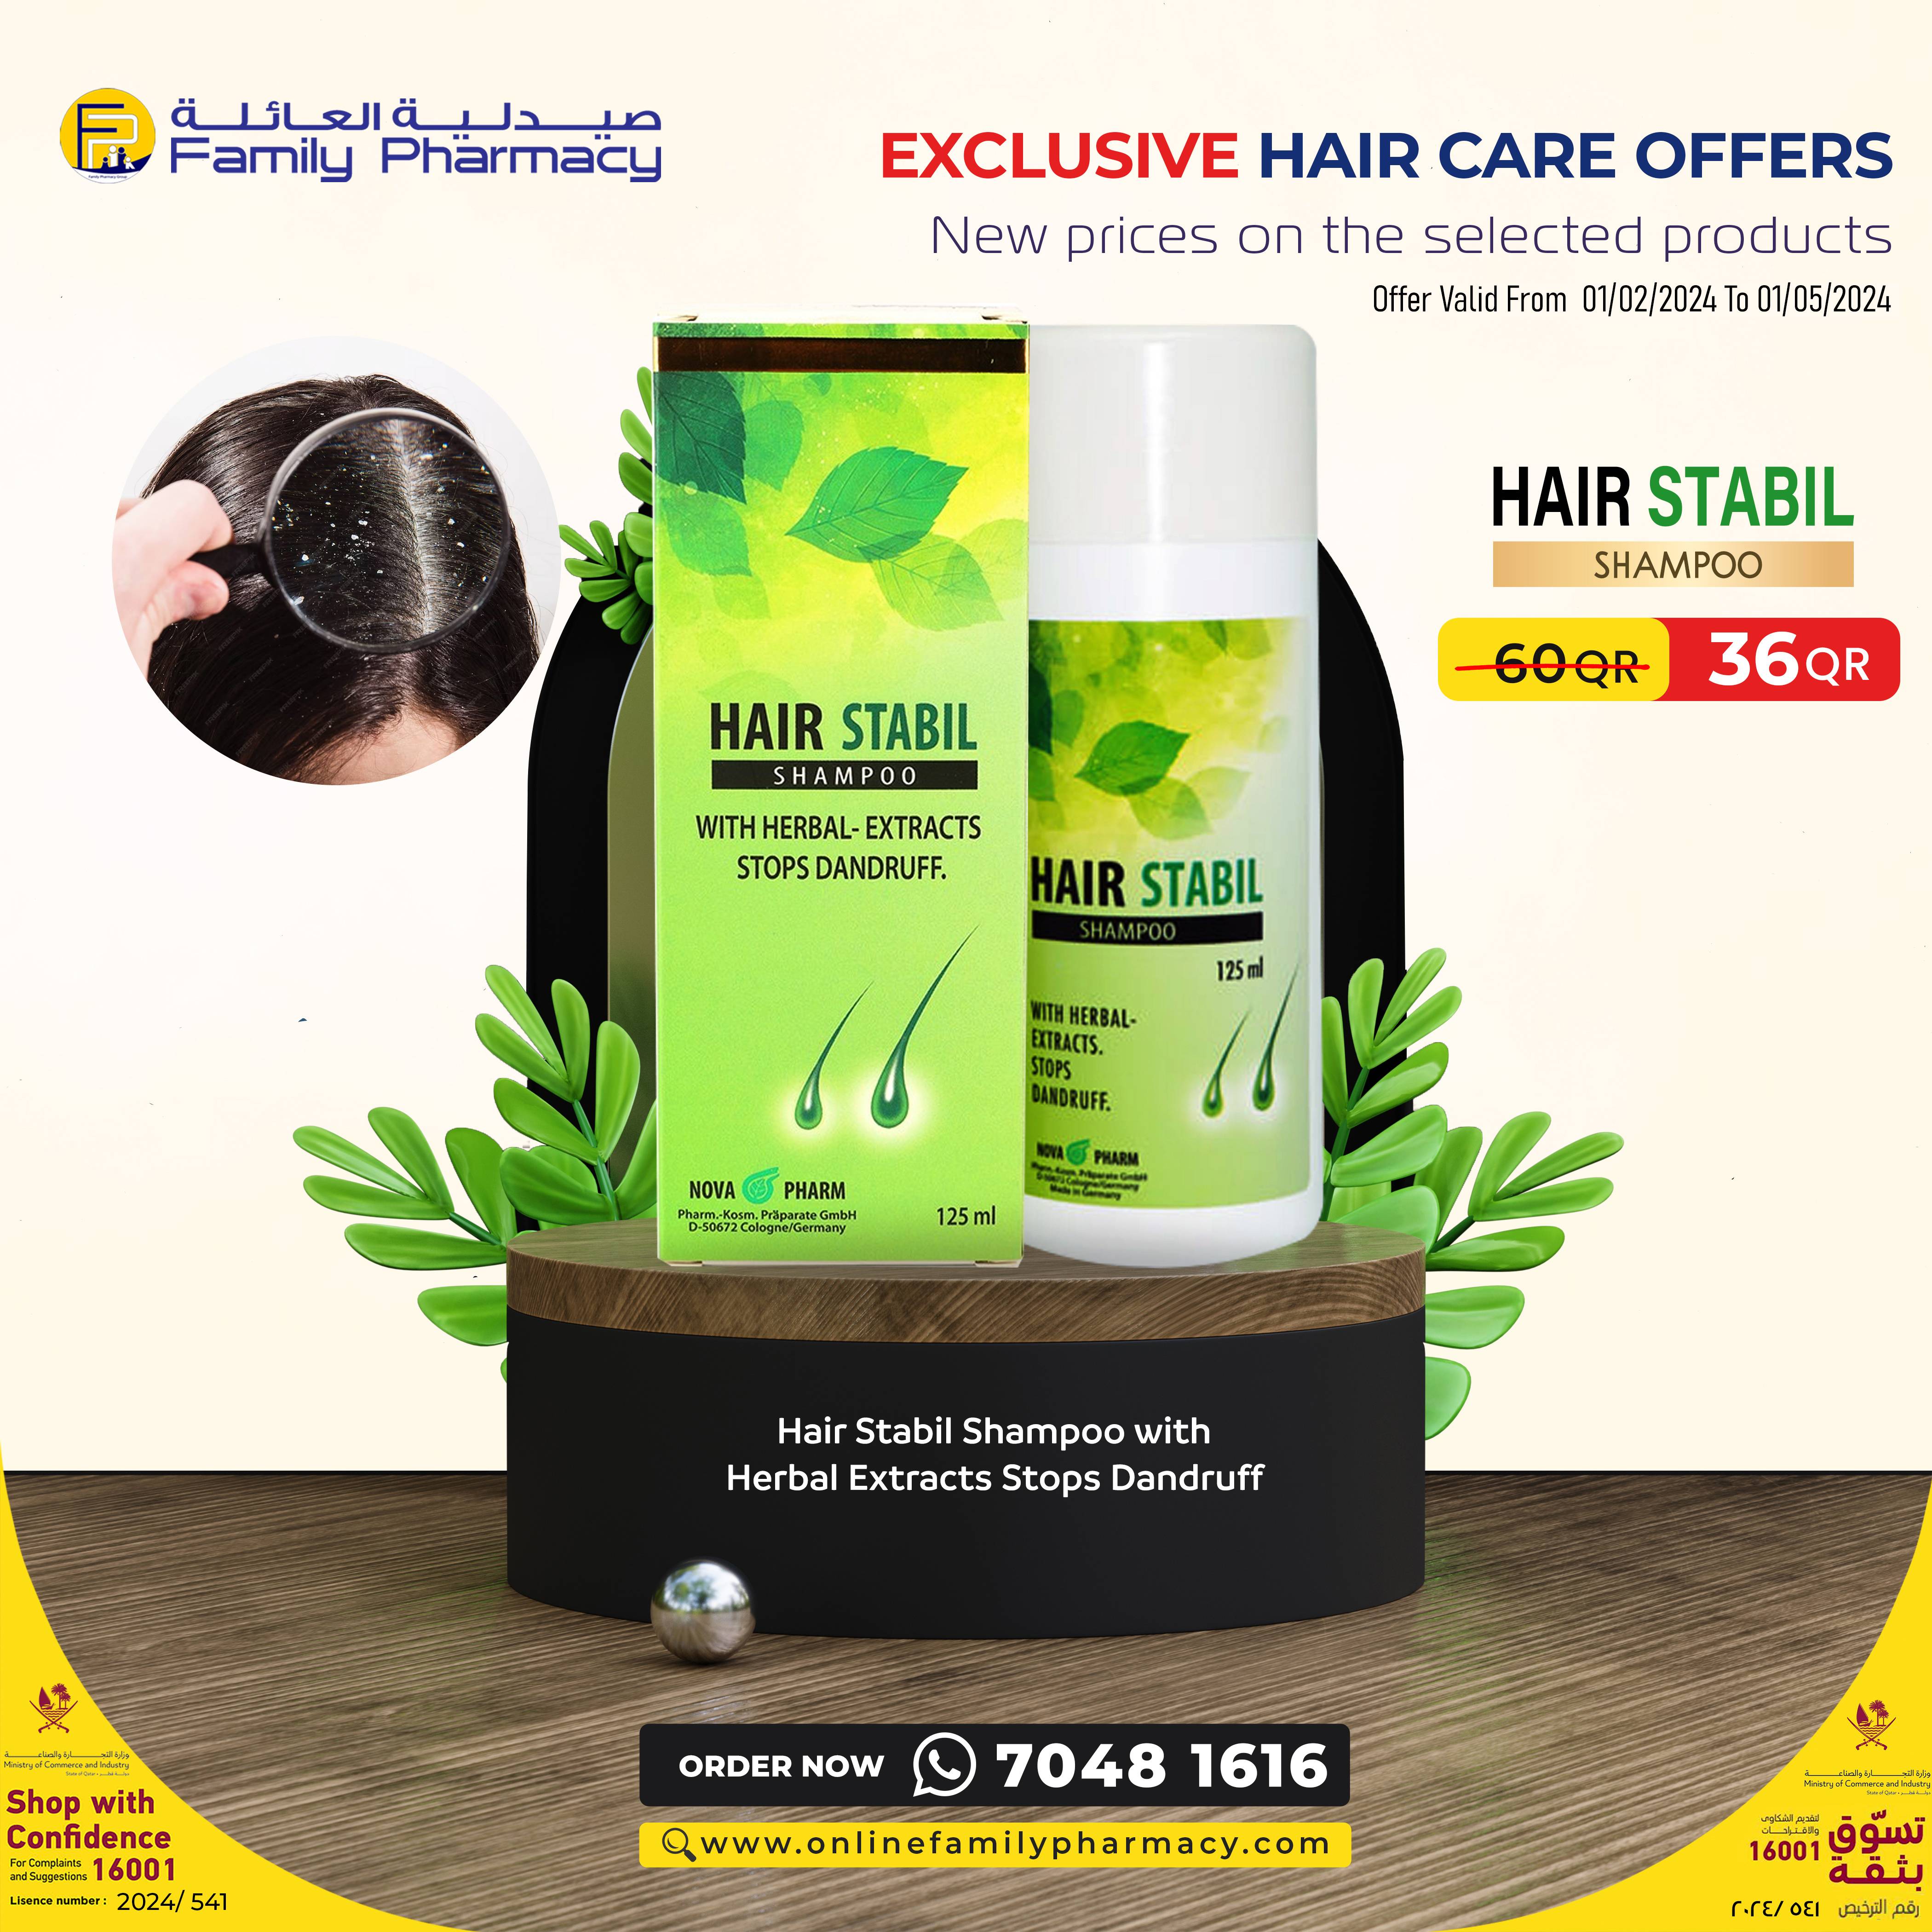 Hair Stabil Shampoo 125ml [herbal] - Nova (offer)